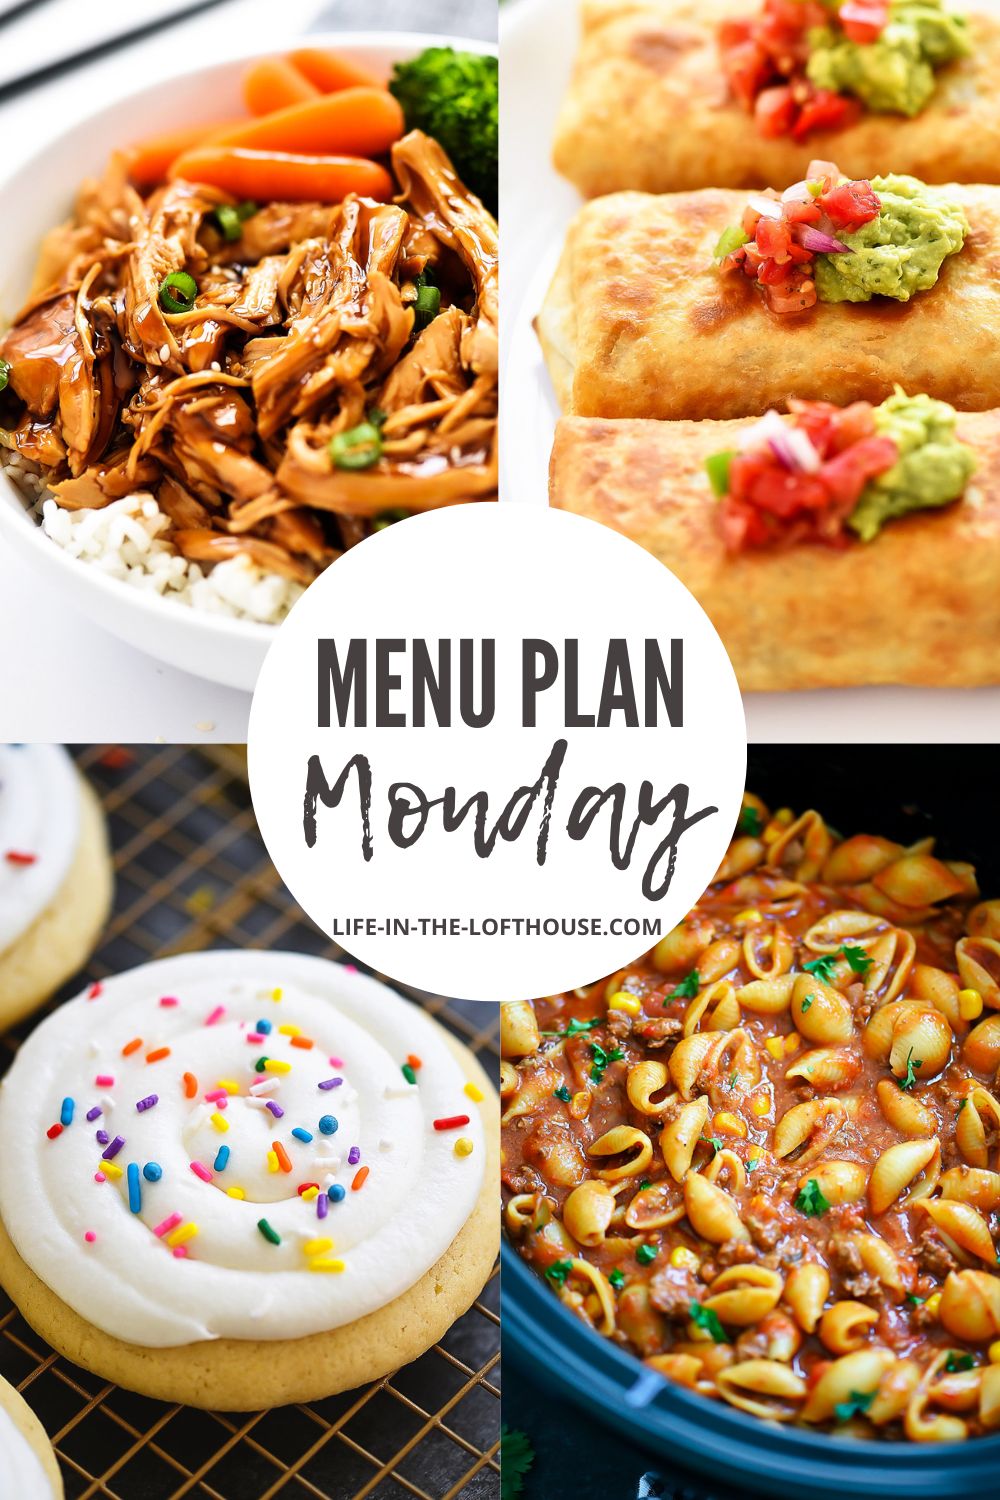 Menu Plan Monday weekly recipes